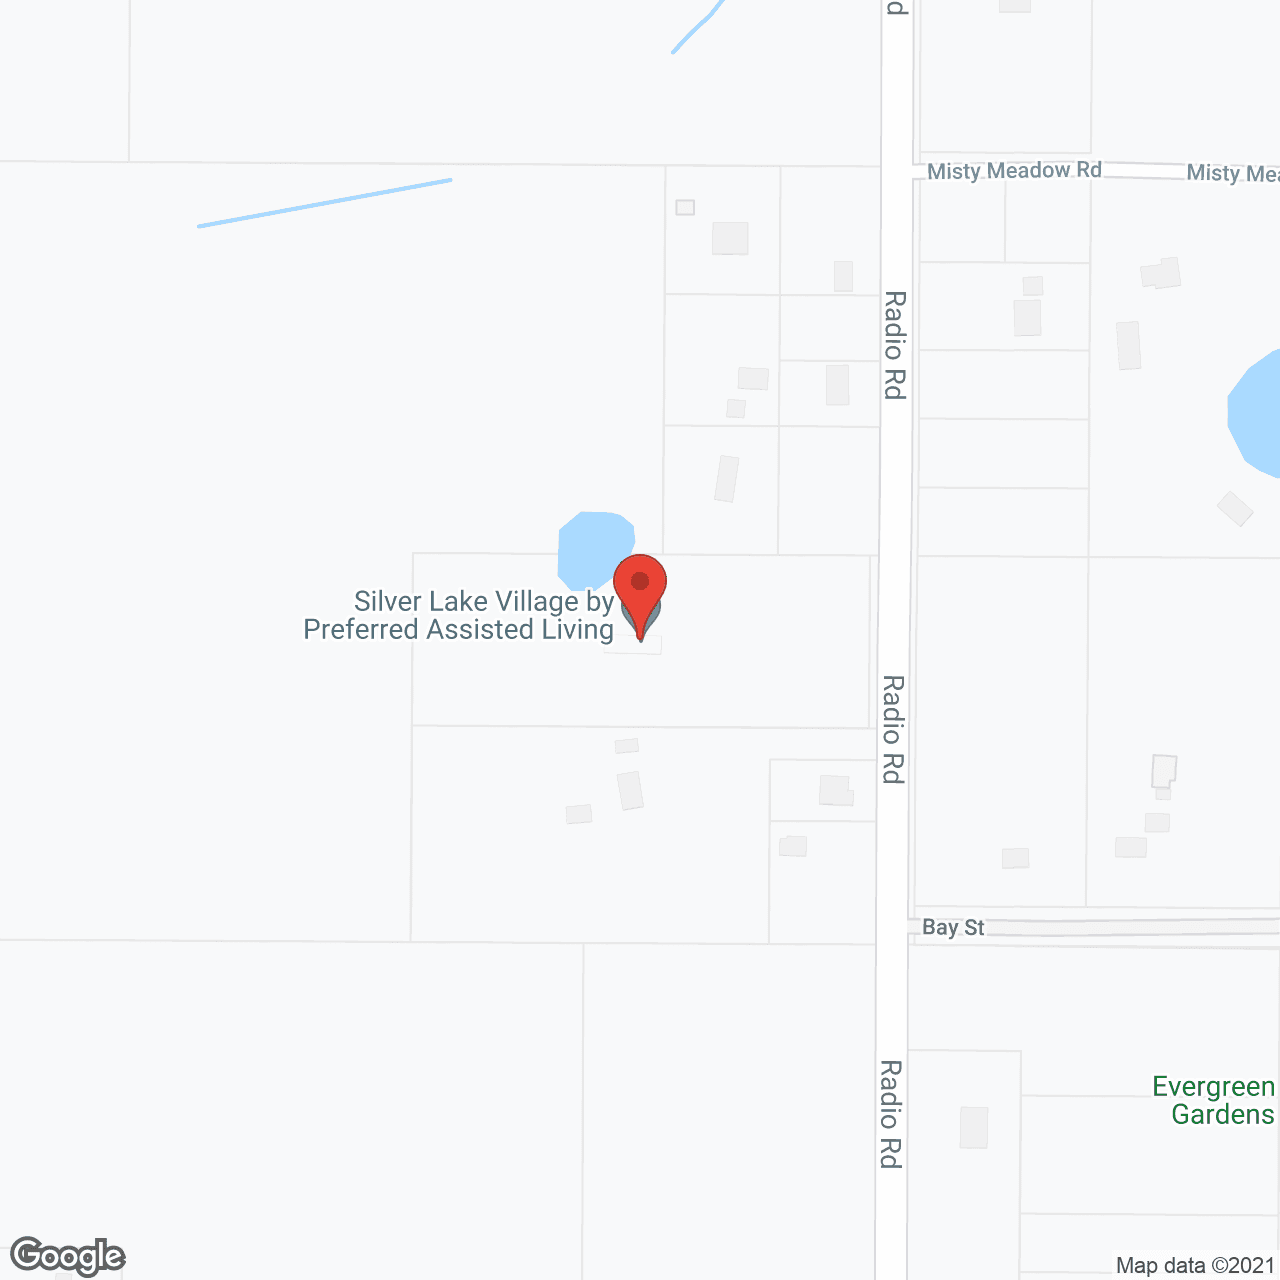 Silver Lake Village in google map